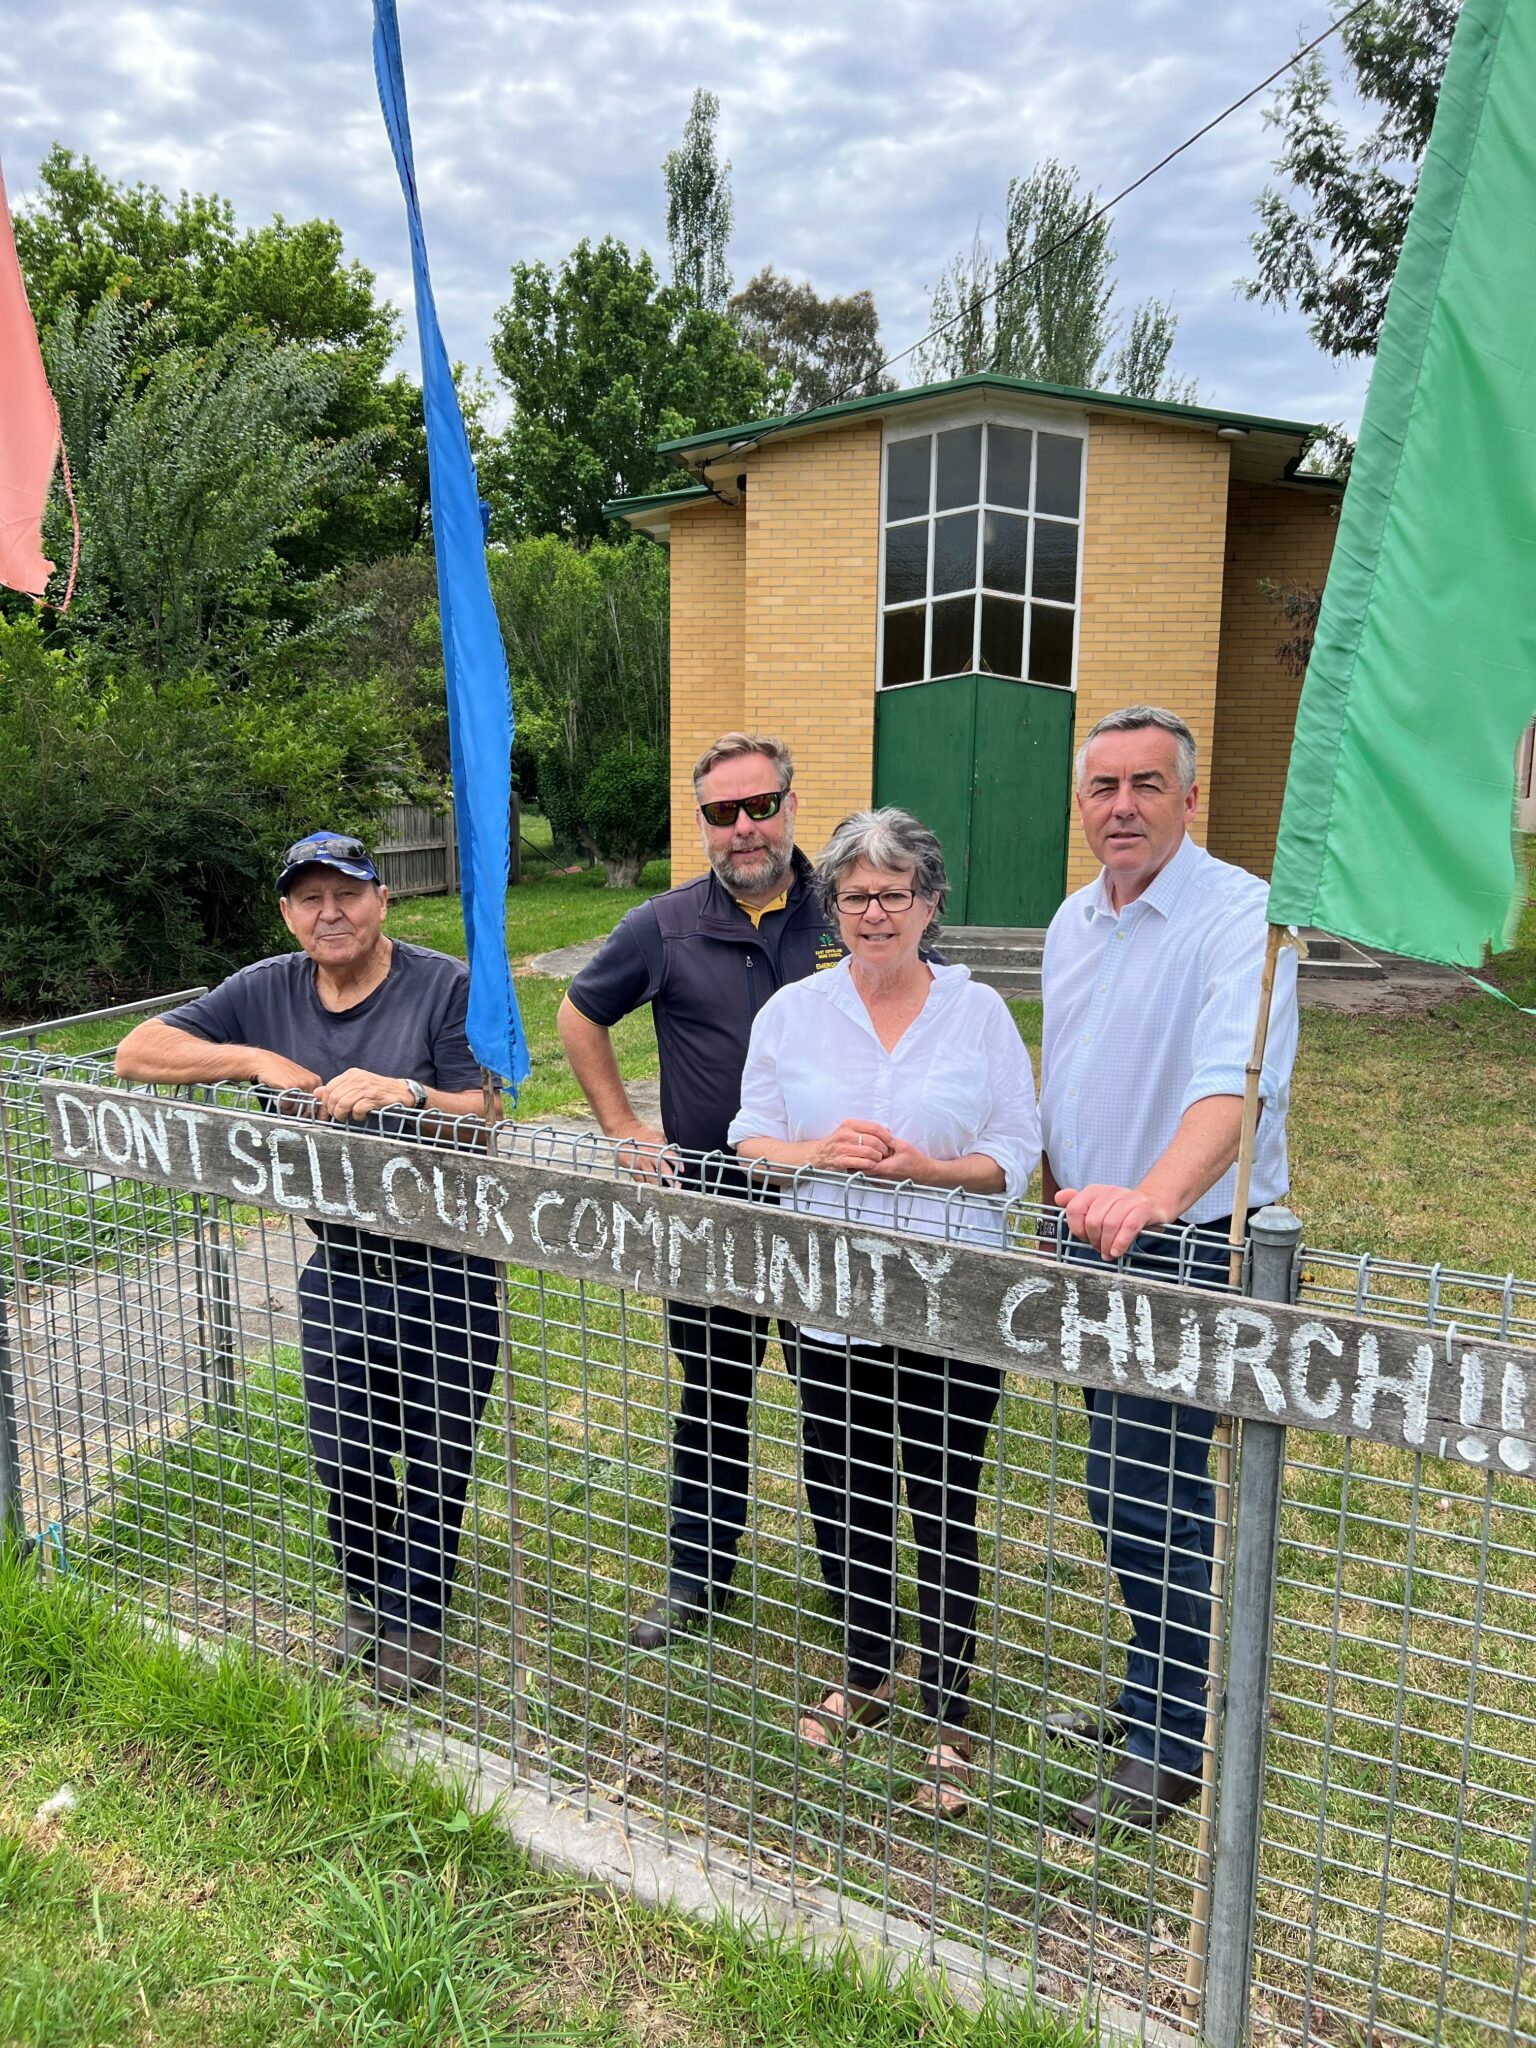 BUCHAN CHURCH SHOULD REMAIN IN COMMUNITY HANDS